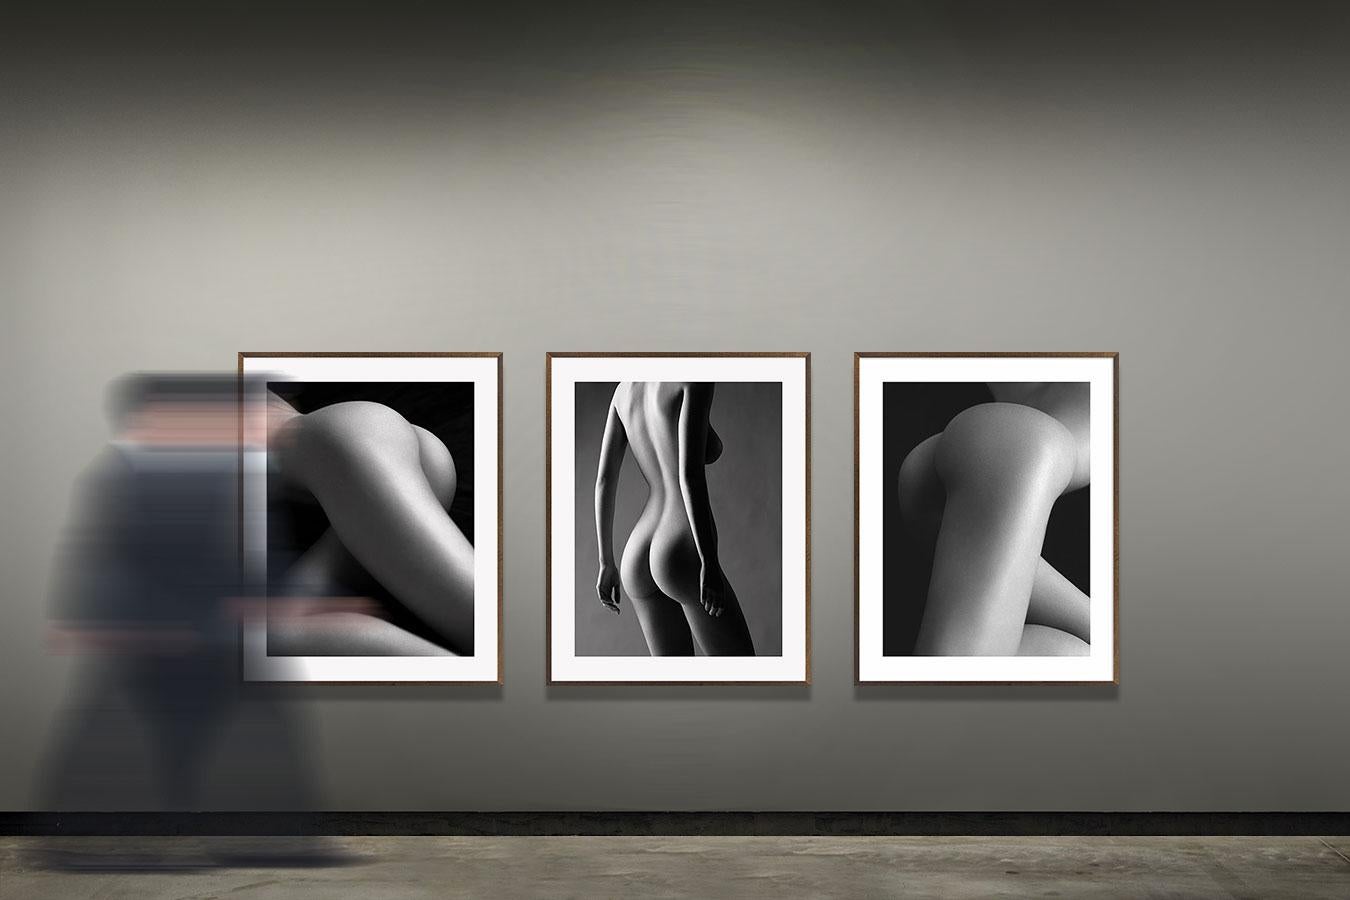 Exposure, Tyra Banks, Mailand (Schwarz), Black and White Photograph, von Bruno Bisang